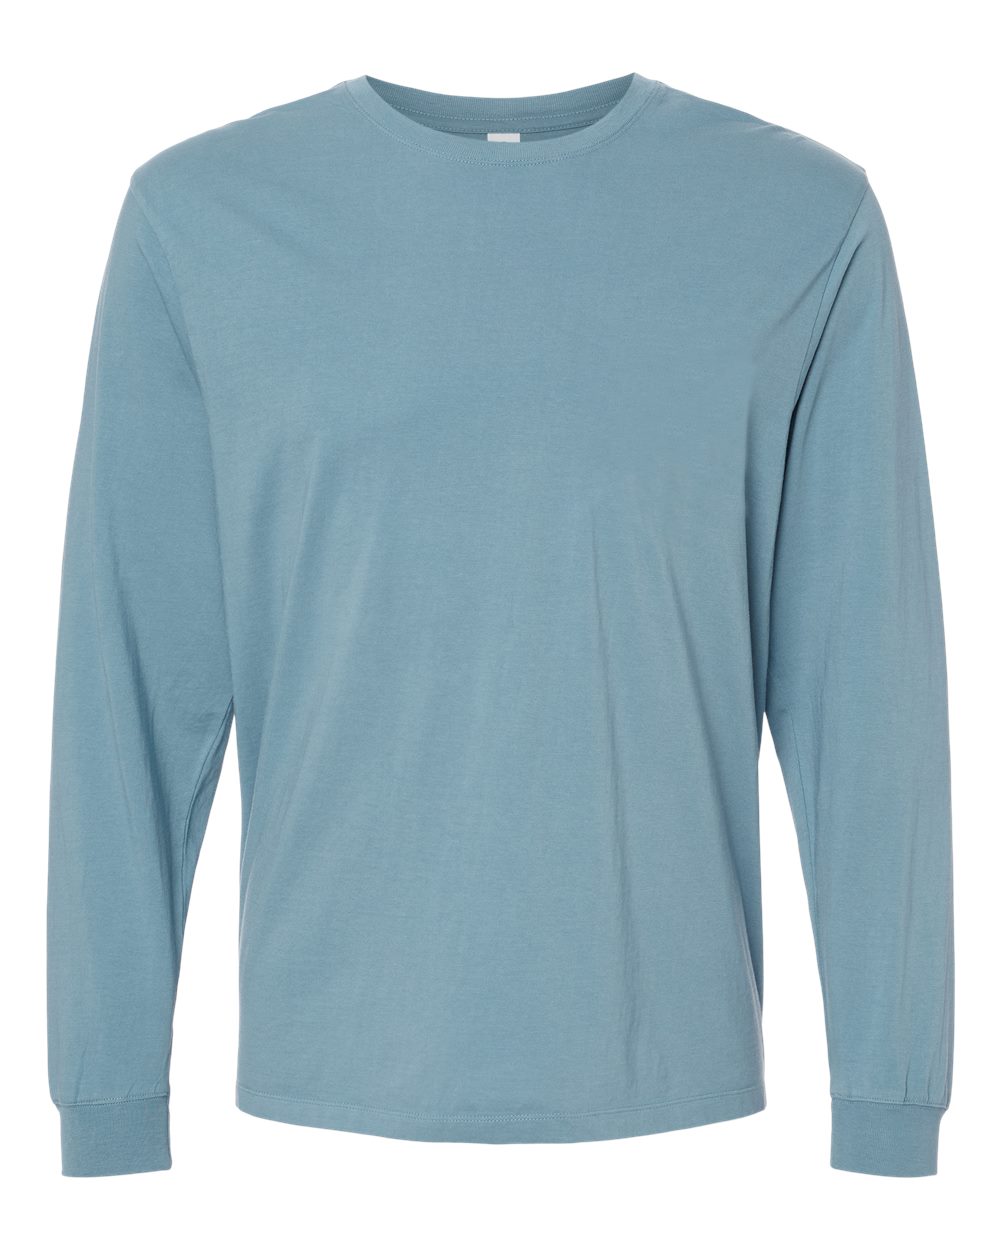 Softshirts® Unisex Organic Cotton Long-Sleeve Shirt in blue